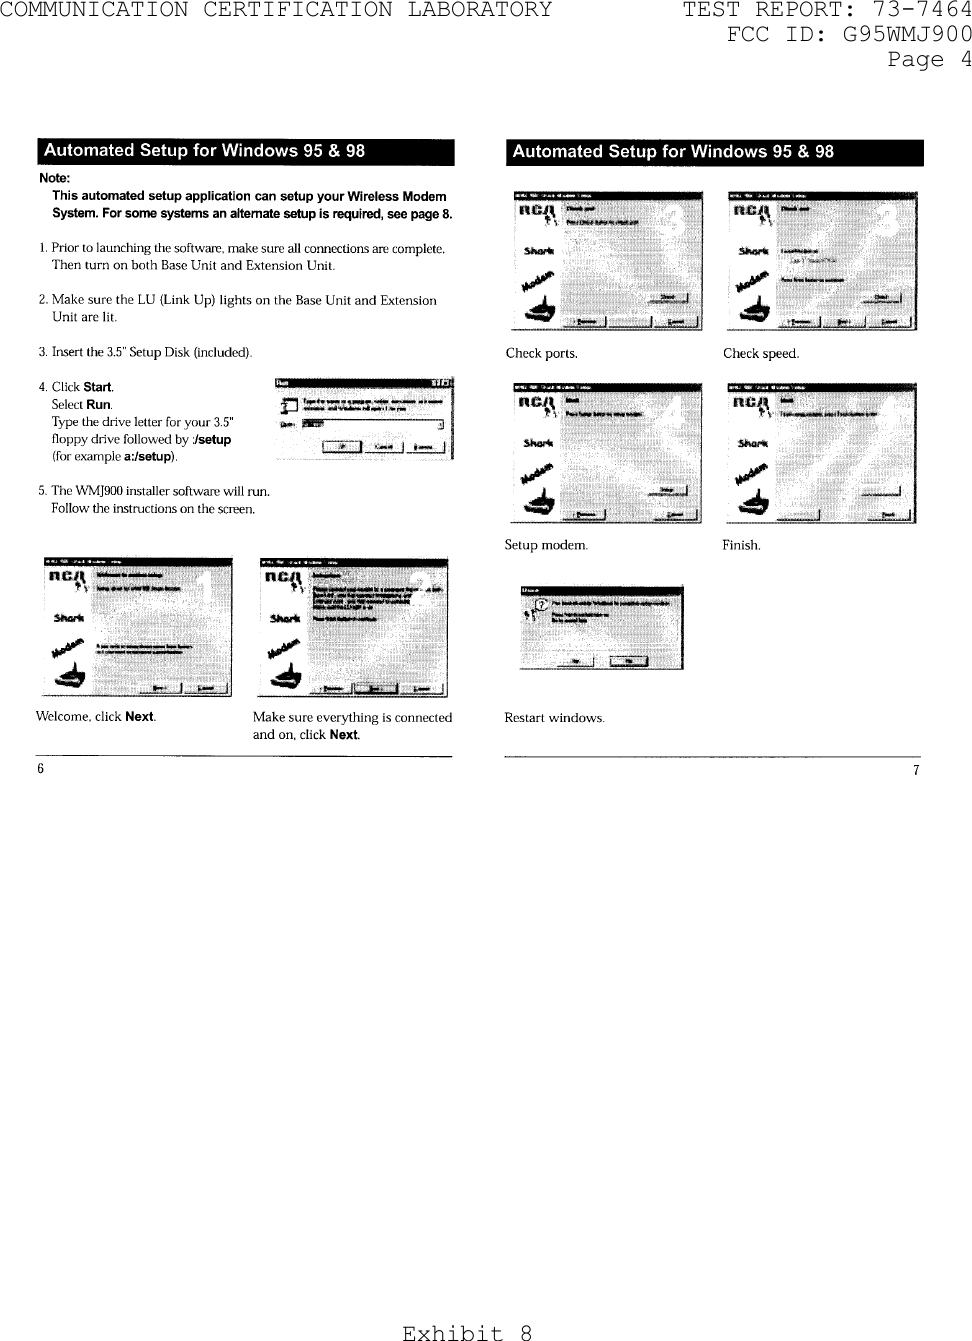 COMMUNICATION CERTIFICATION LABORATORY  TEST REPORT: 73-7464     FCC ID: G95WMJ900   Page 4 Exhibit 8    